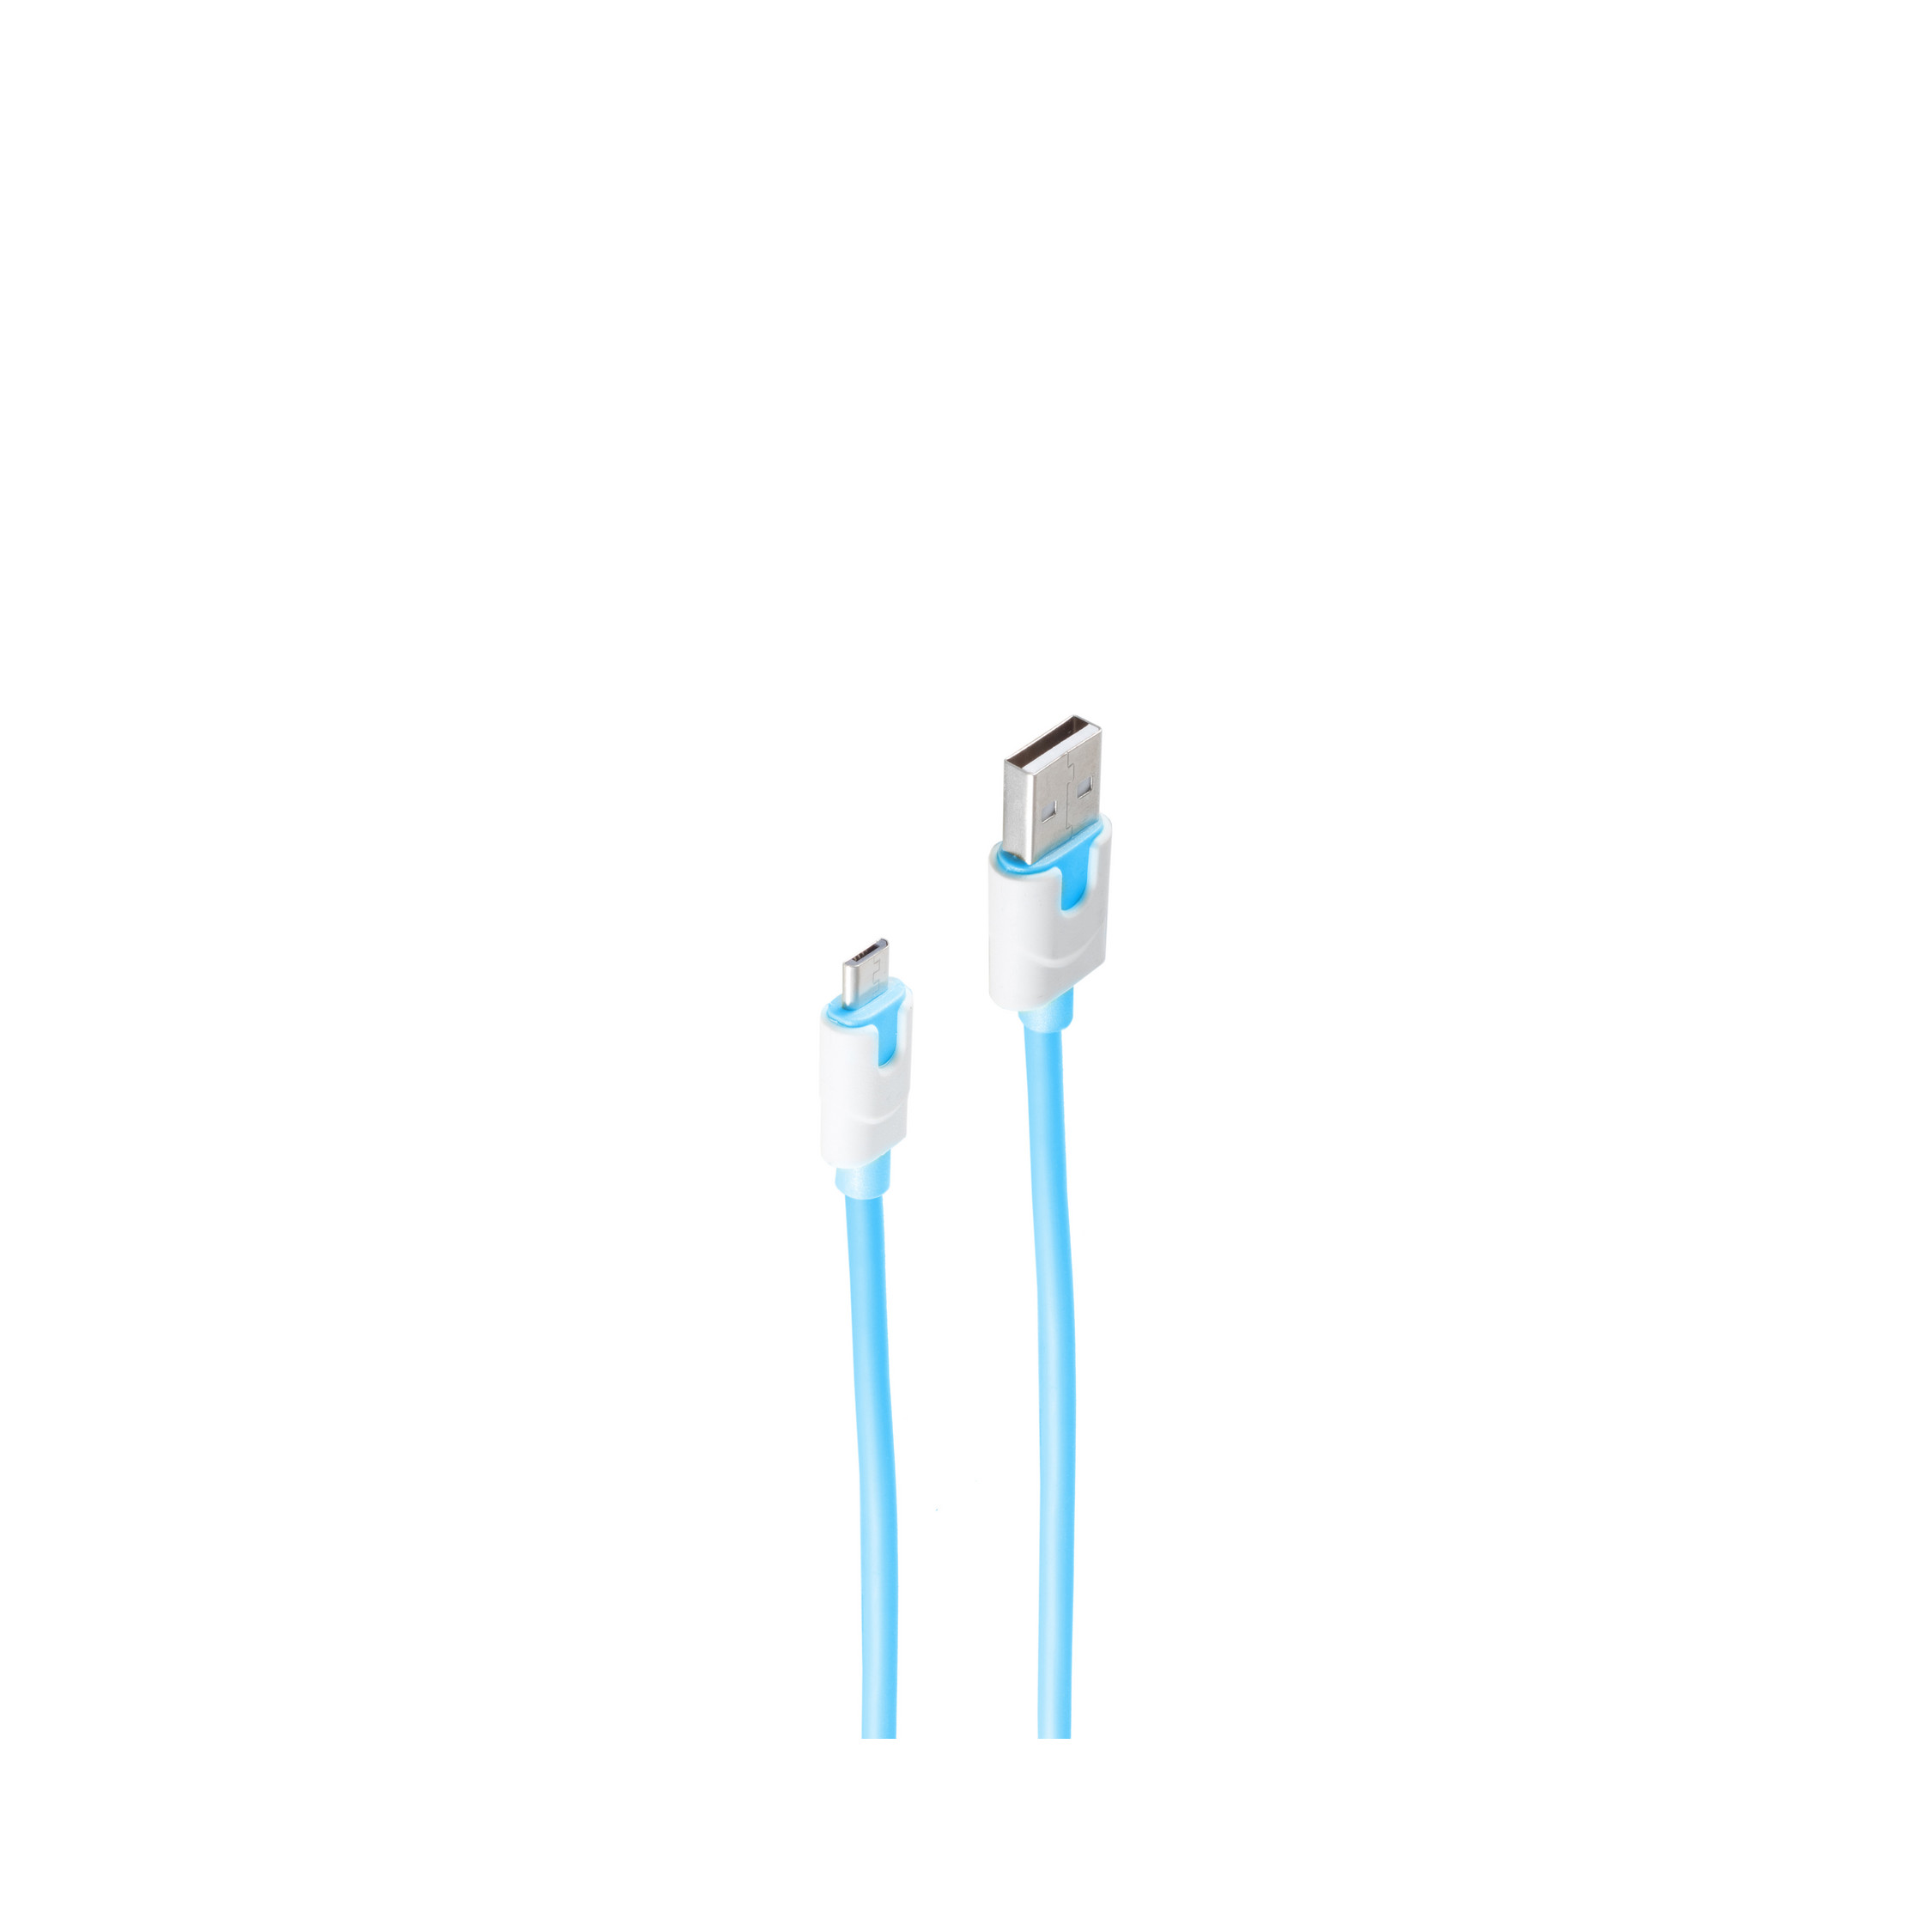 B, auf USB blau 0,3 USB-Ladekabel SHIVERPEAKS Stecker A blau, m, 0,3m, Ladekabel, Micro